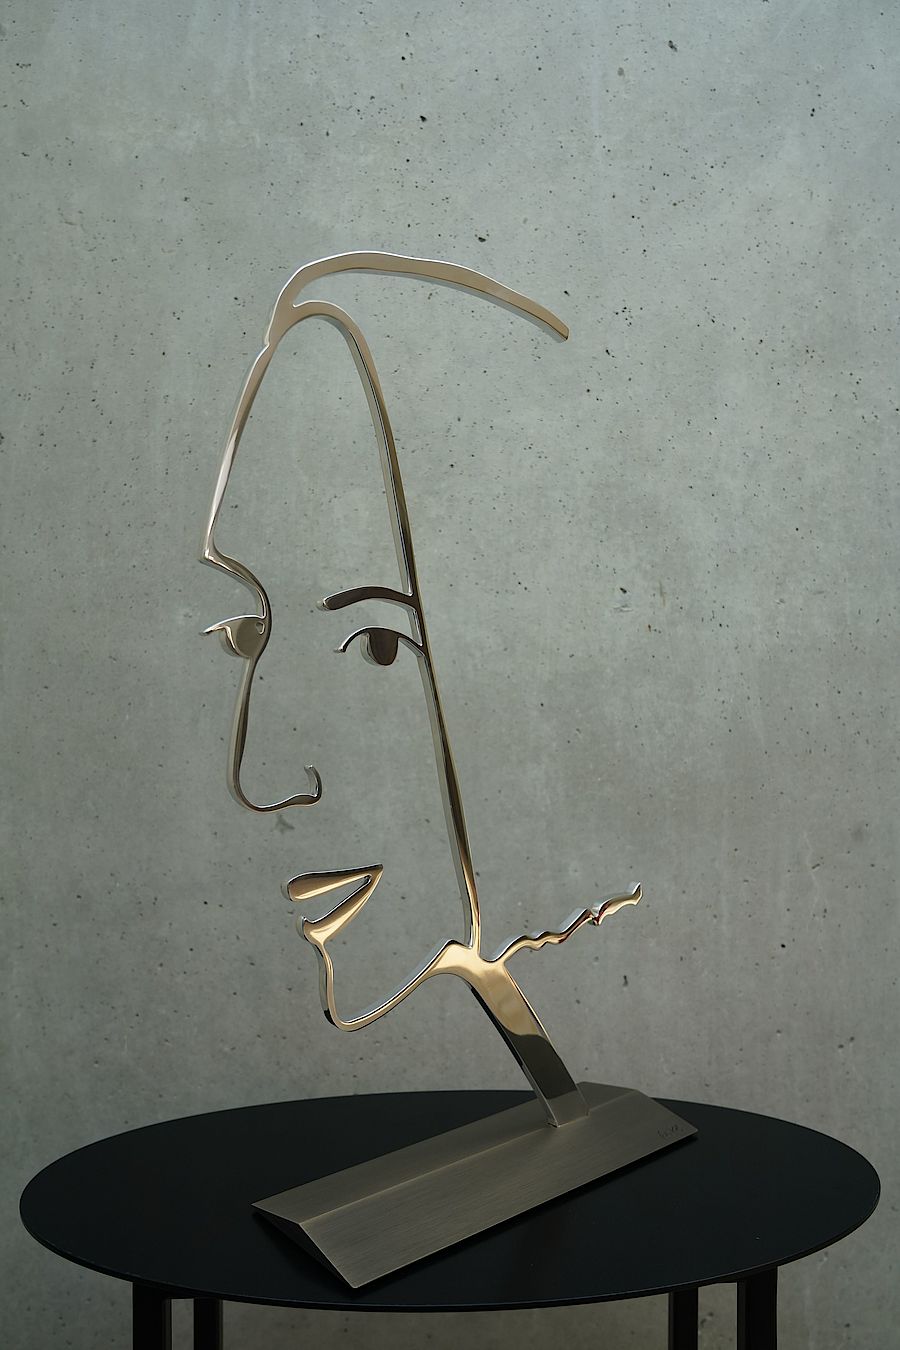 Korff Stiftung - Alex Katz - Sculptures - Ada 2